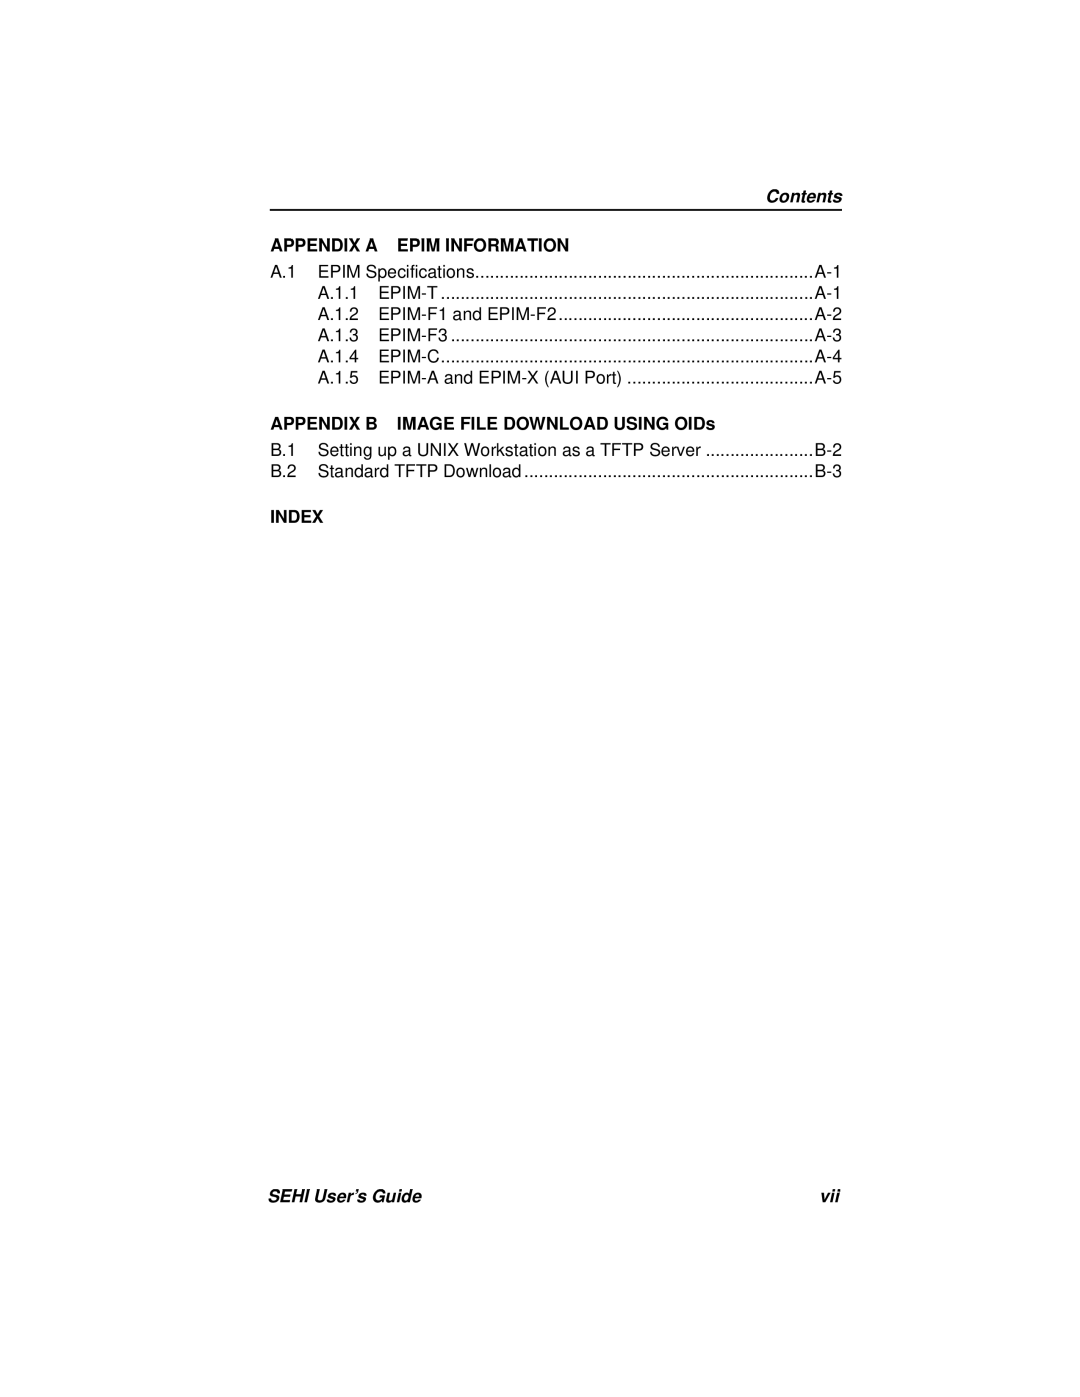 Cabletron Systems SEHI-22FL manual Contents, Appendix A, Epim Information, APPENDIX B IMAGE FILE DOWNLOAD USING OIDs, Index 